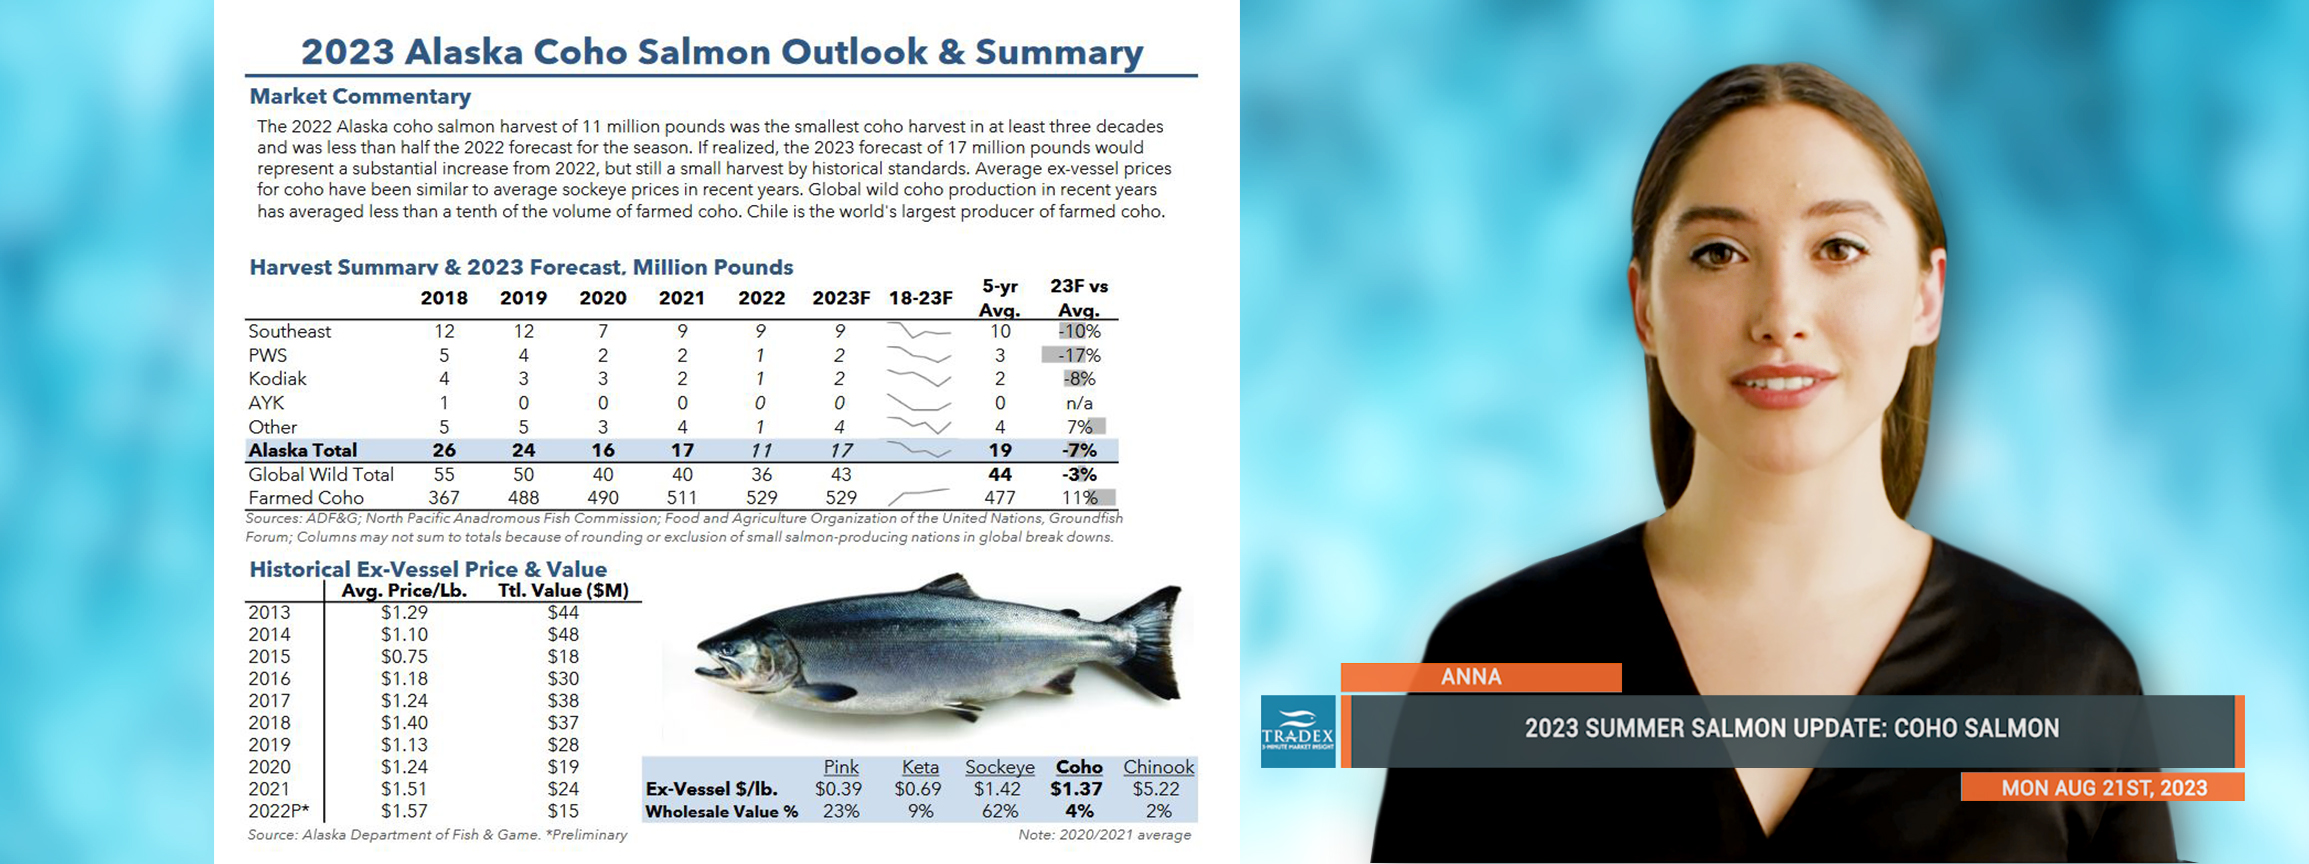 2023 Alaska Coho Salmon Outlook & Summary